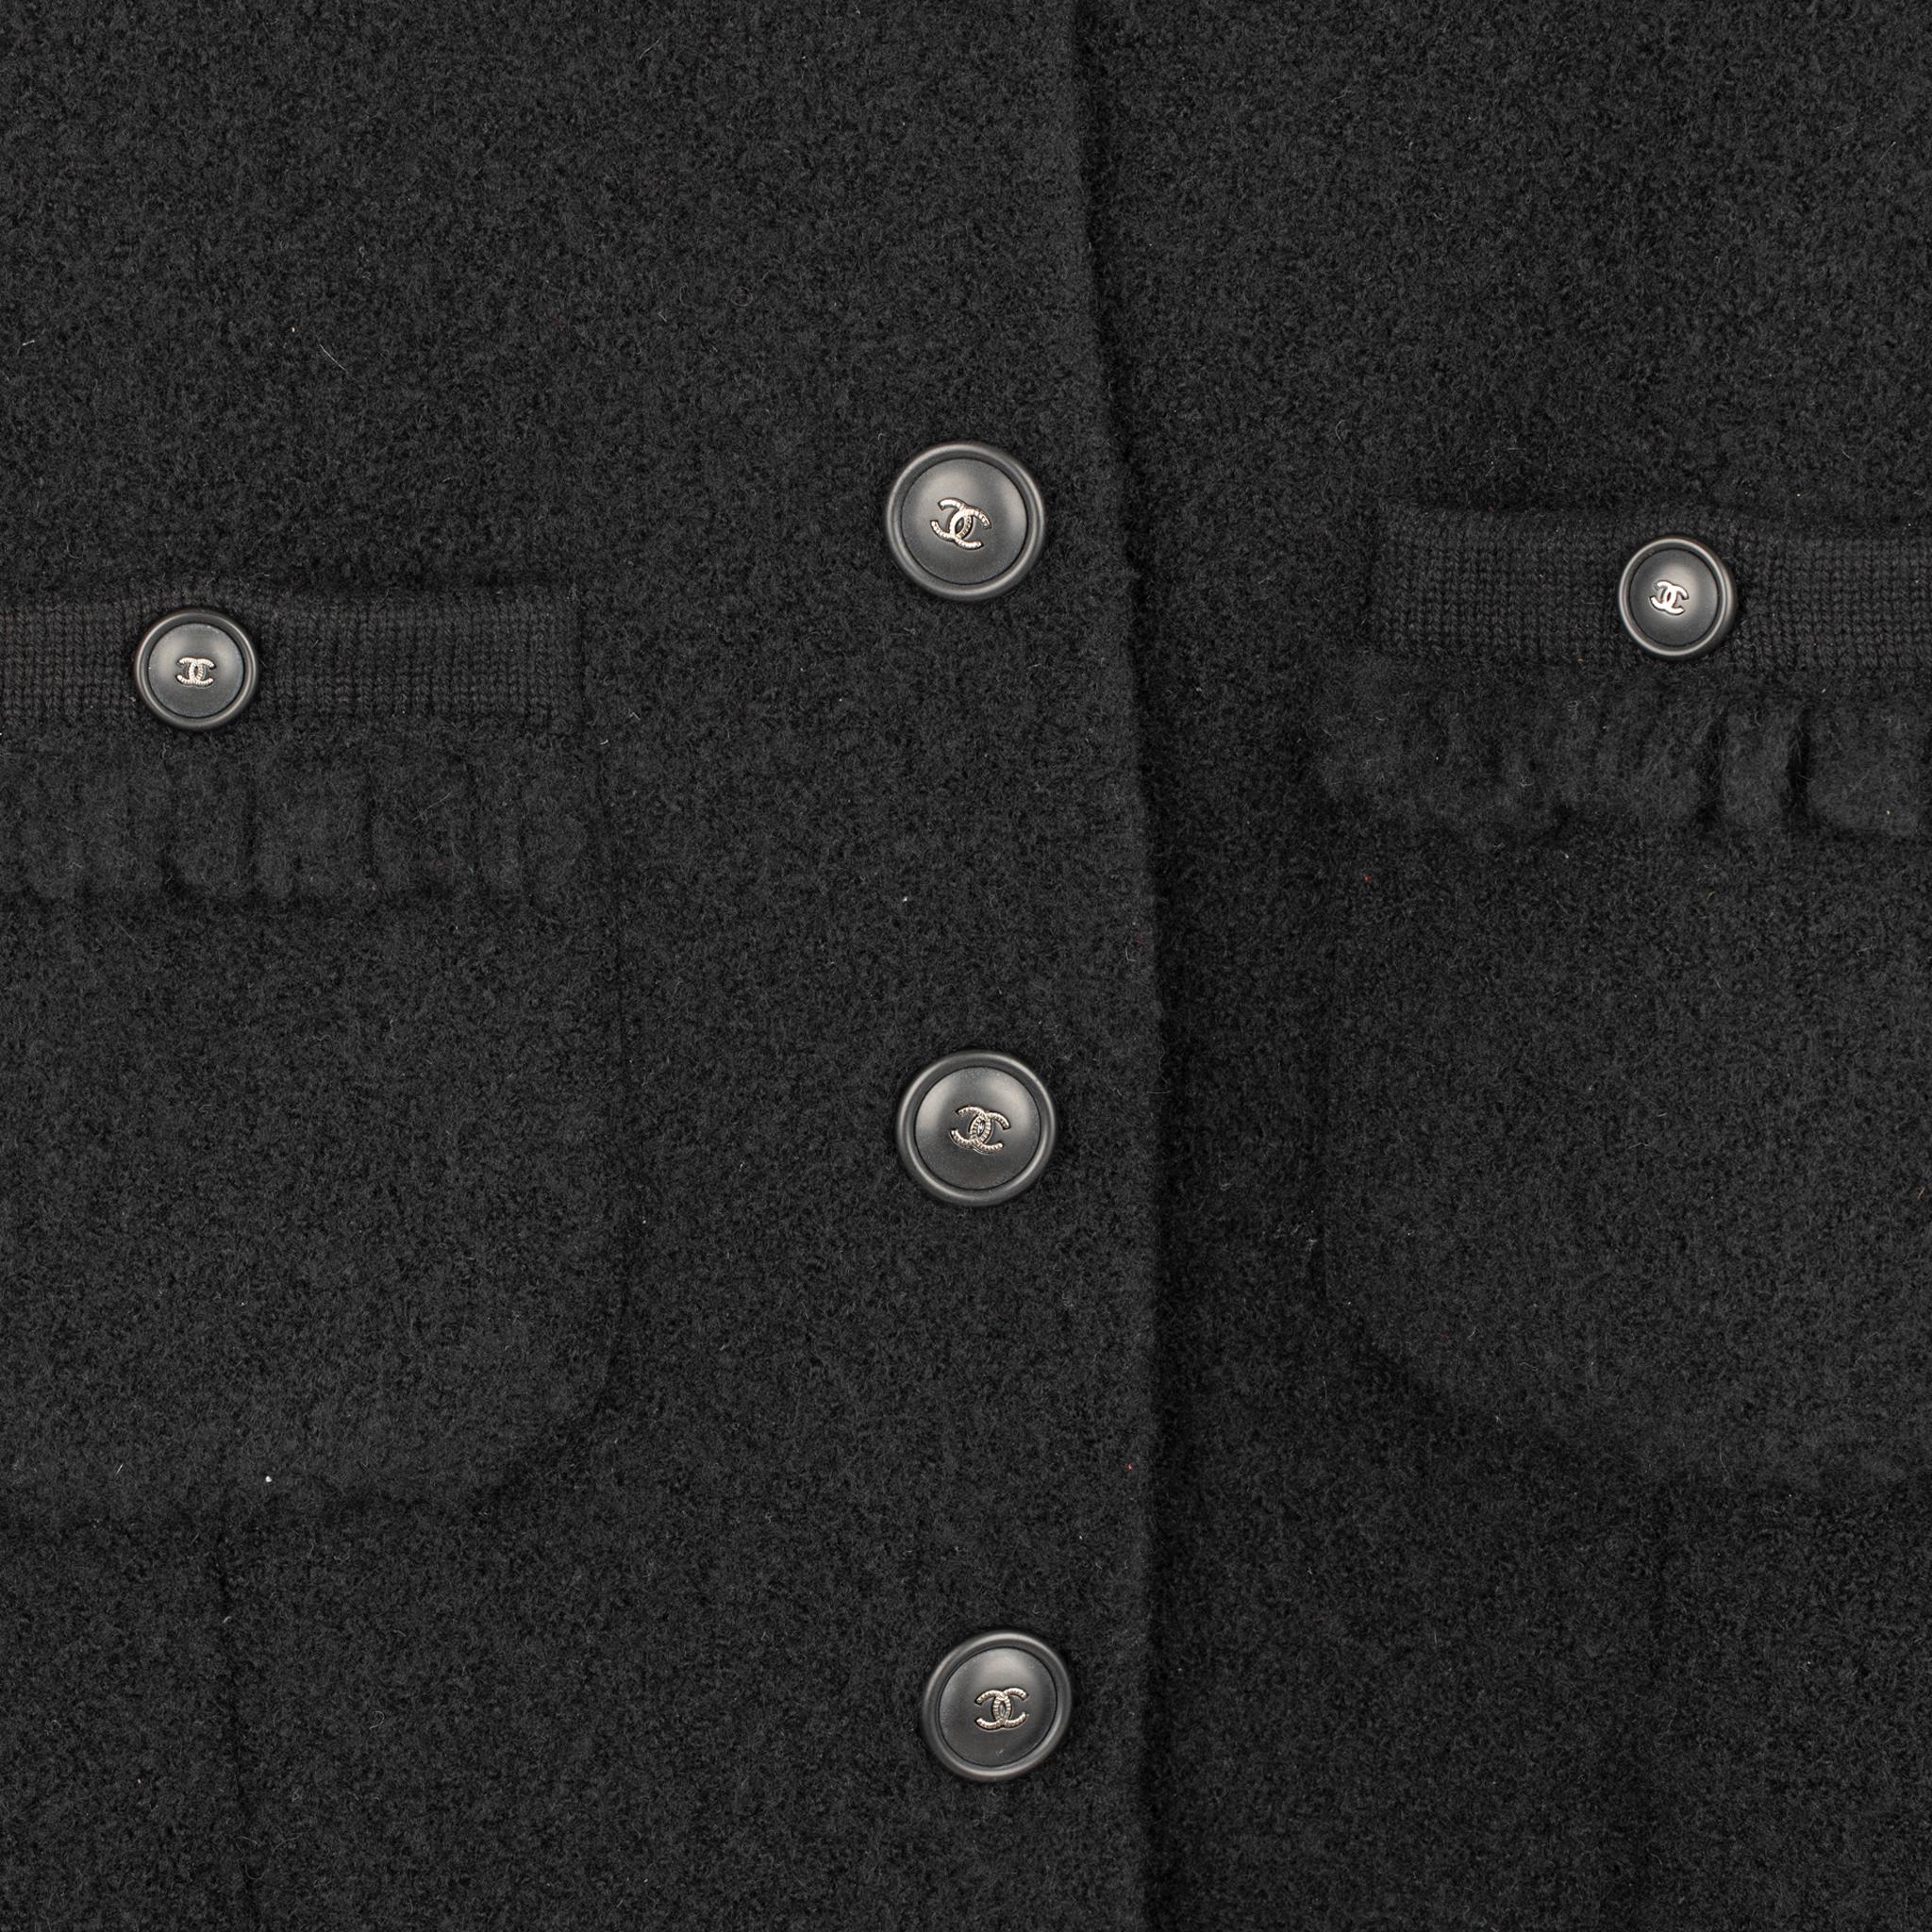 Chanel Black Cashmere Cardigan

Brand:

Chanel

Product:

Chanel Black Cashmere Cardigan

Size:

40 Fr

Colour:

Black

Material:

88% Cashmere, 6% Polypropylene & 6% Silk

Product Code:

P57322K07505

Condition:

Preloved; Excellent

Details:

-